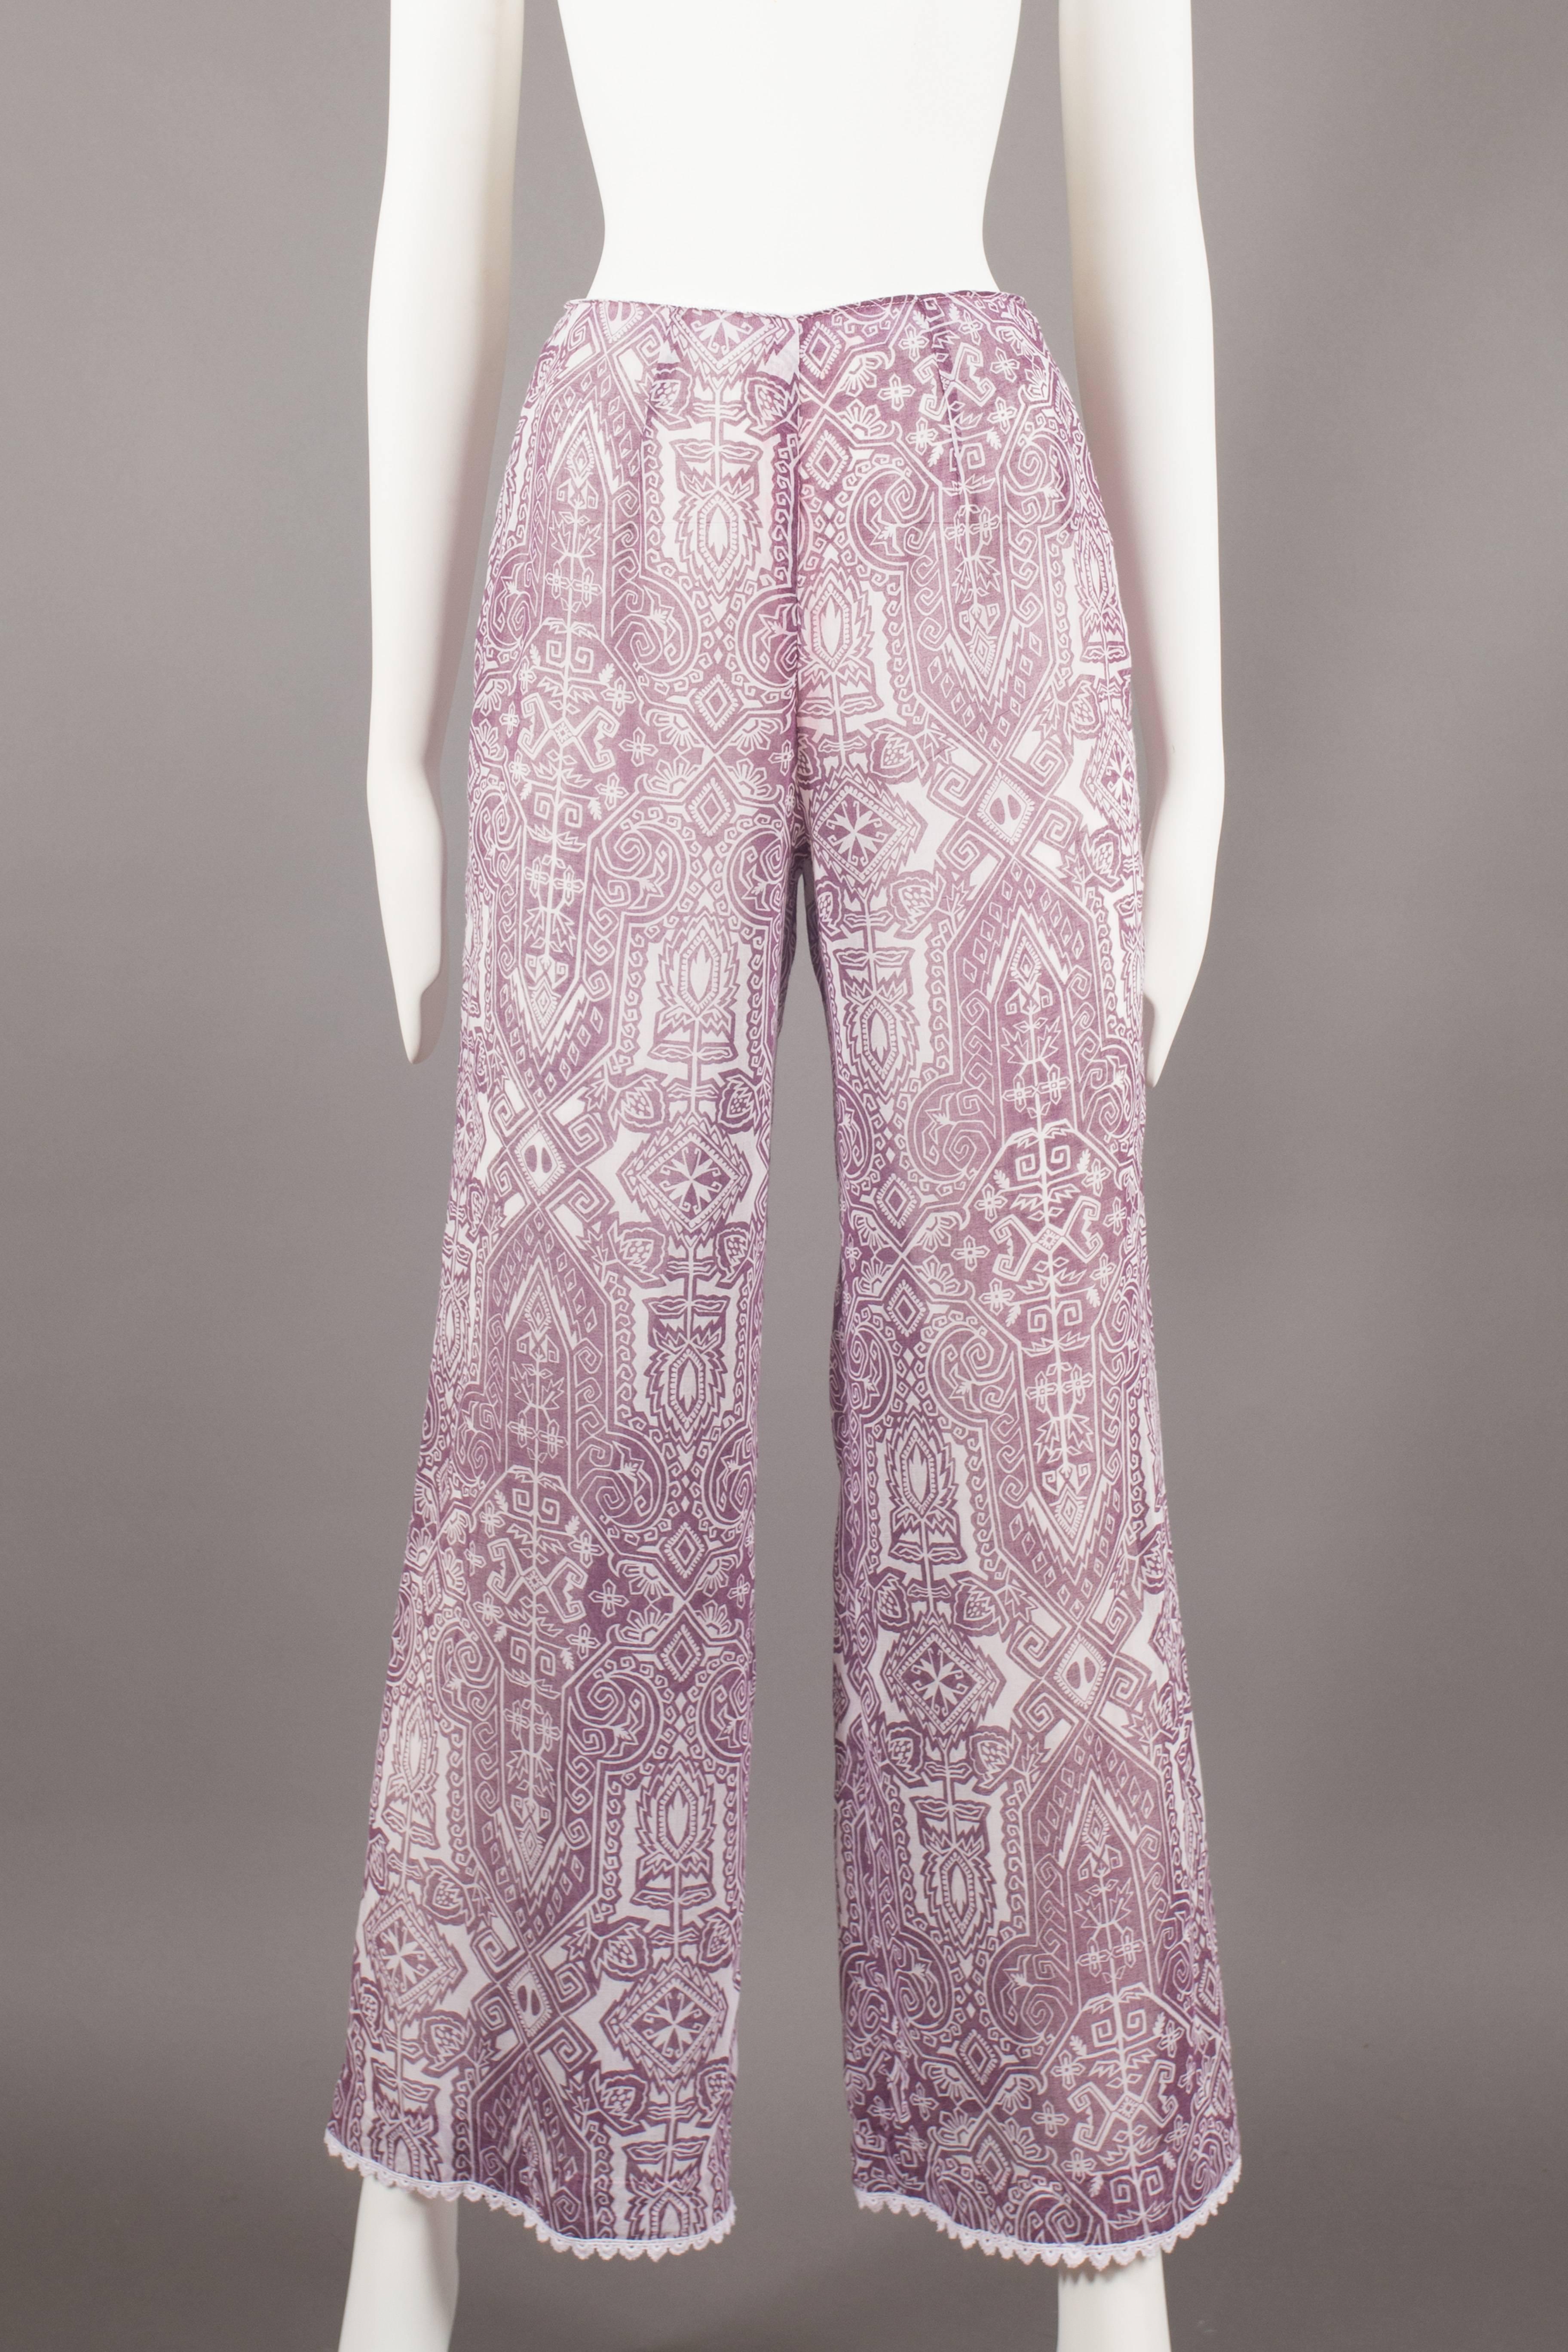 Gina Fratini purple voile cotton summer dress and pants ensemble, circa 1971 2